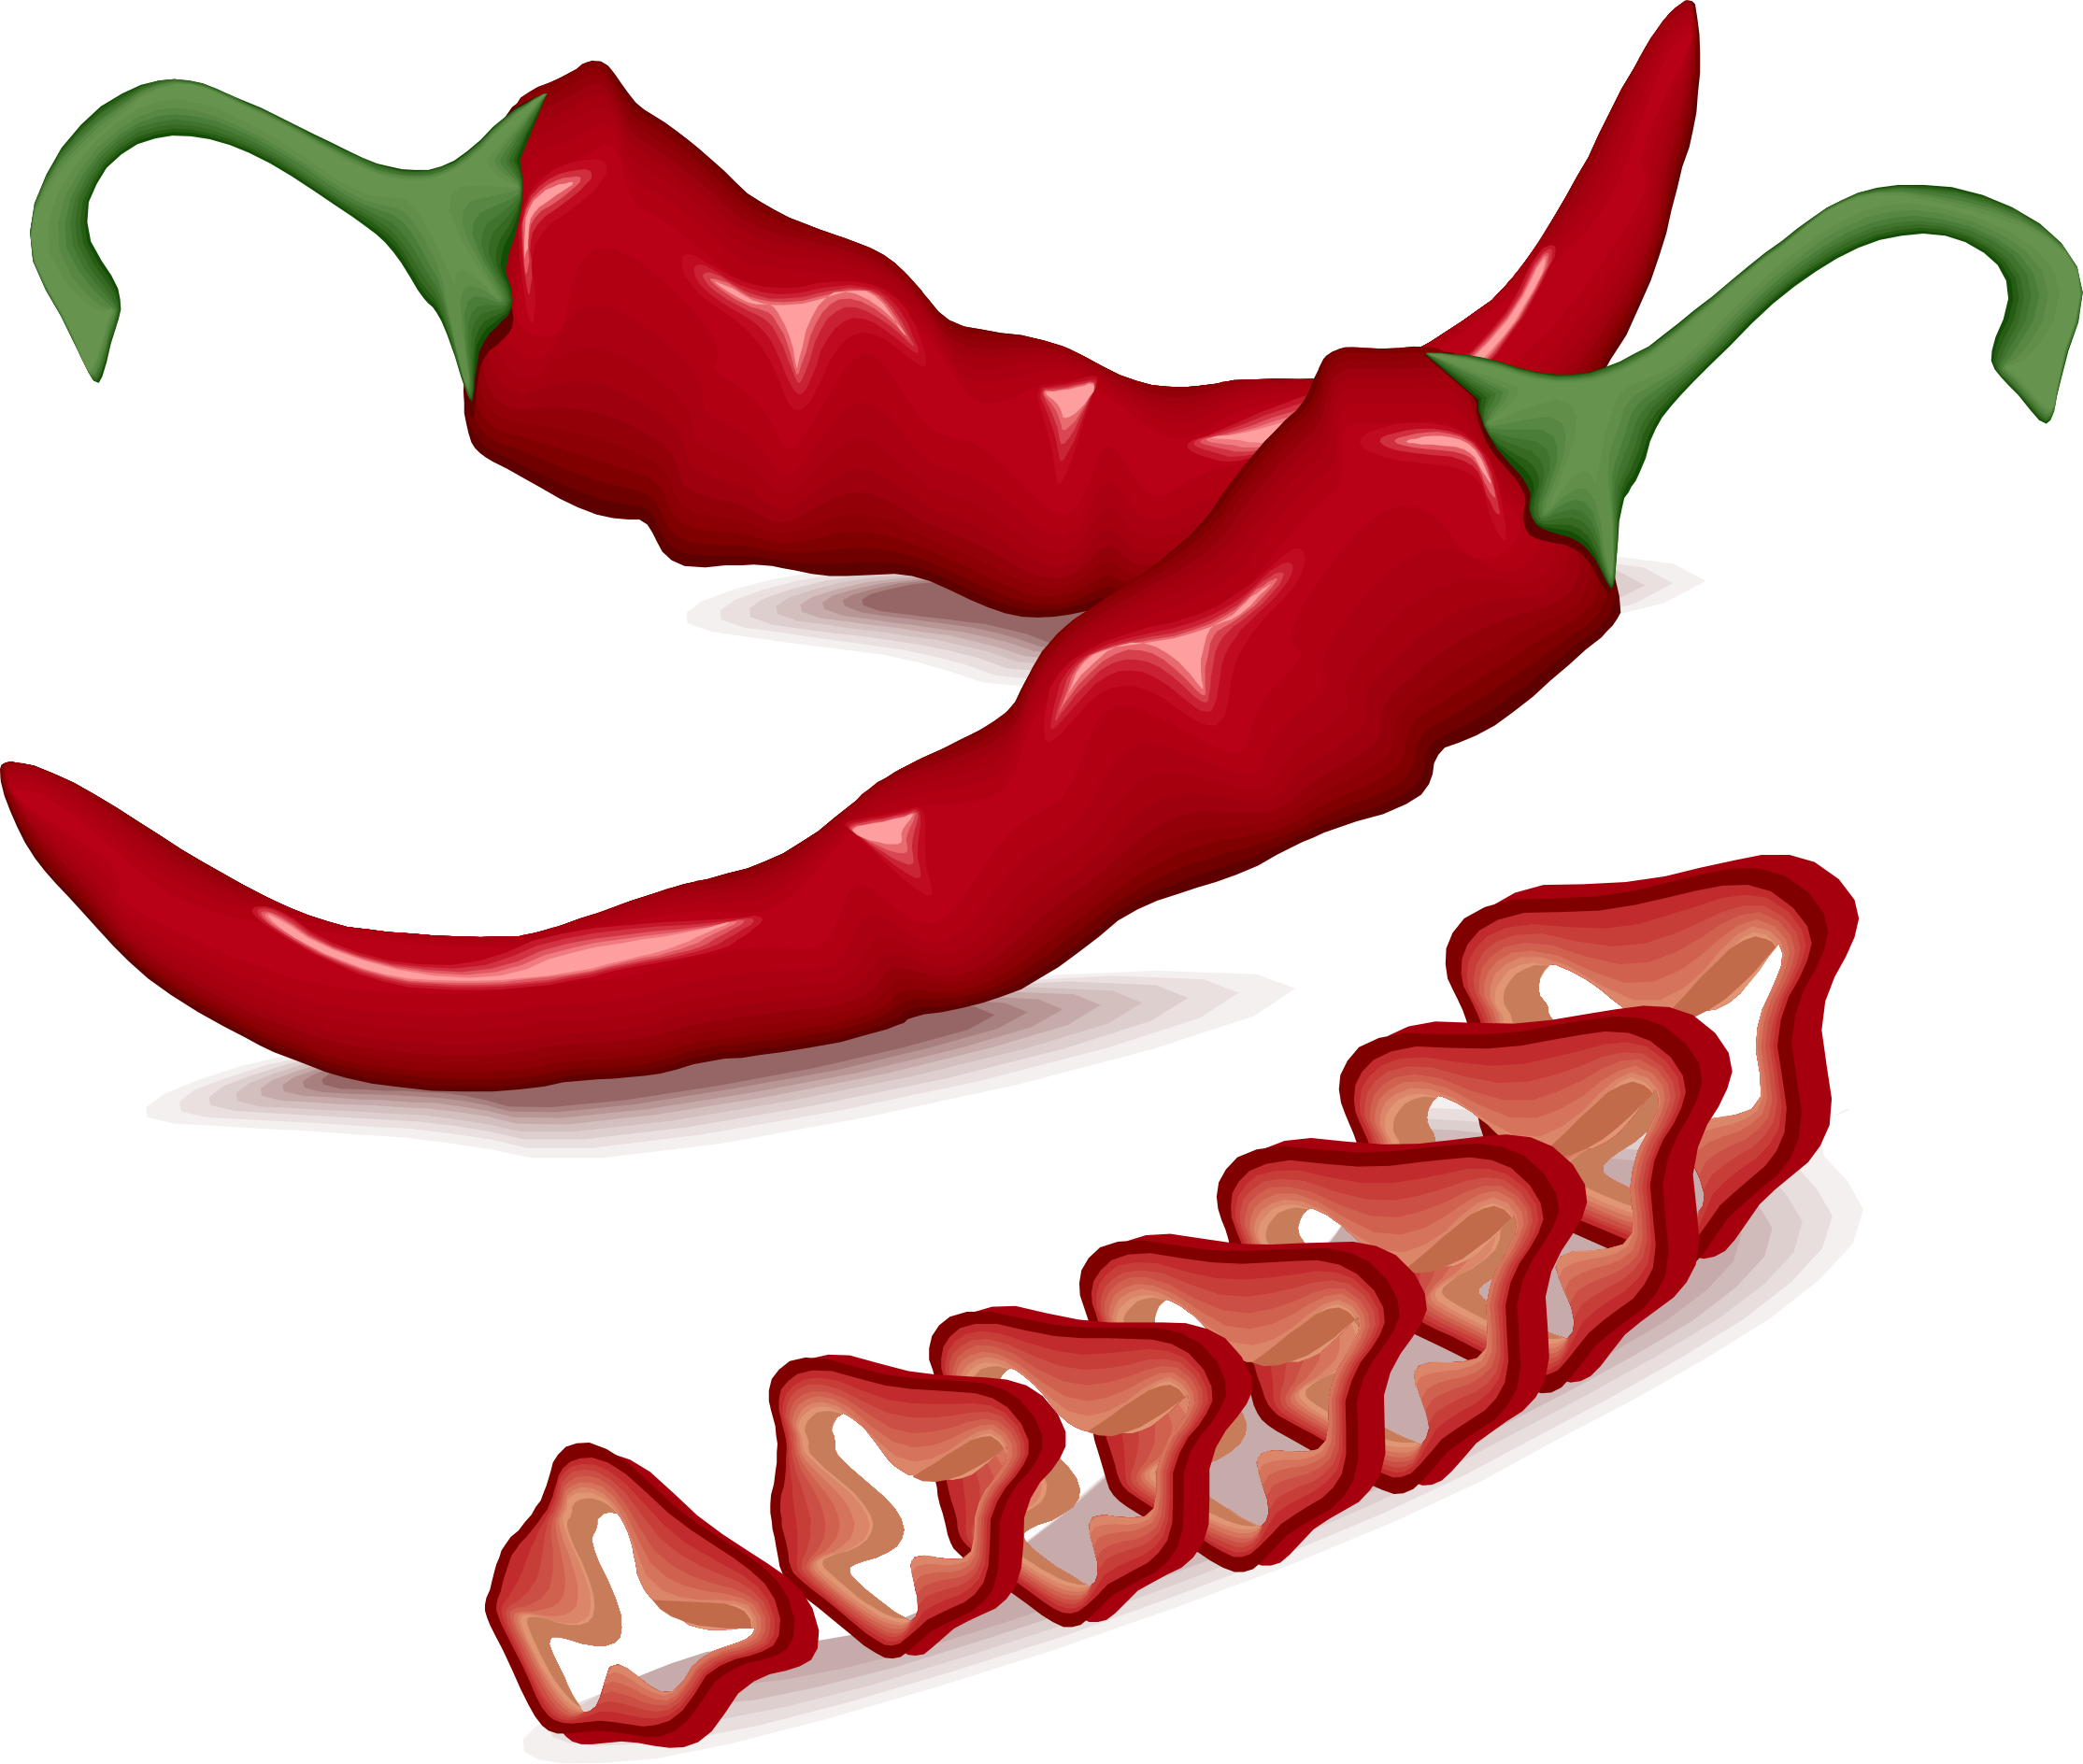 jalapeno clipart chili pepper